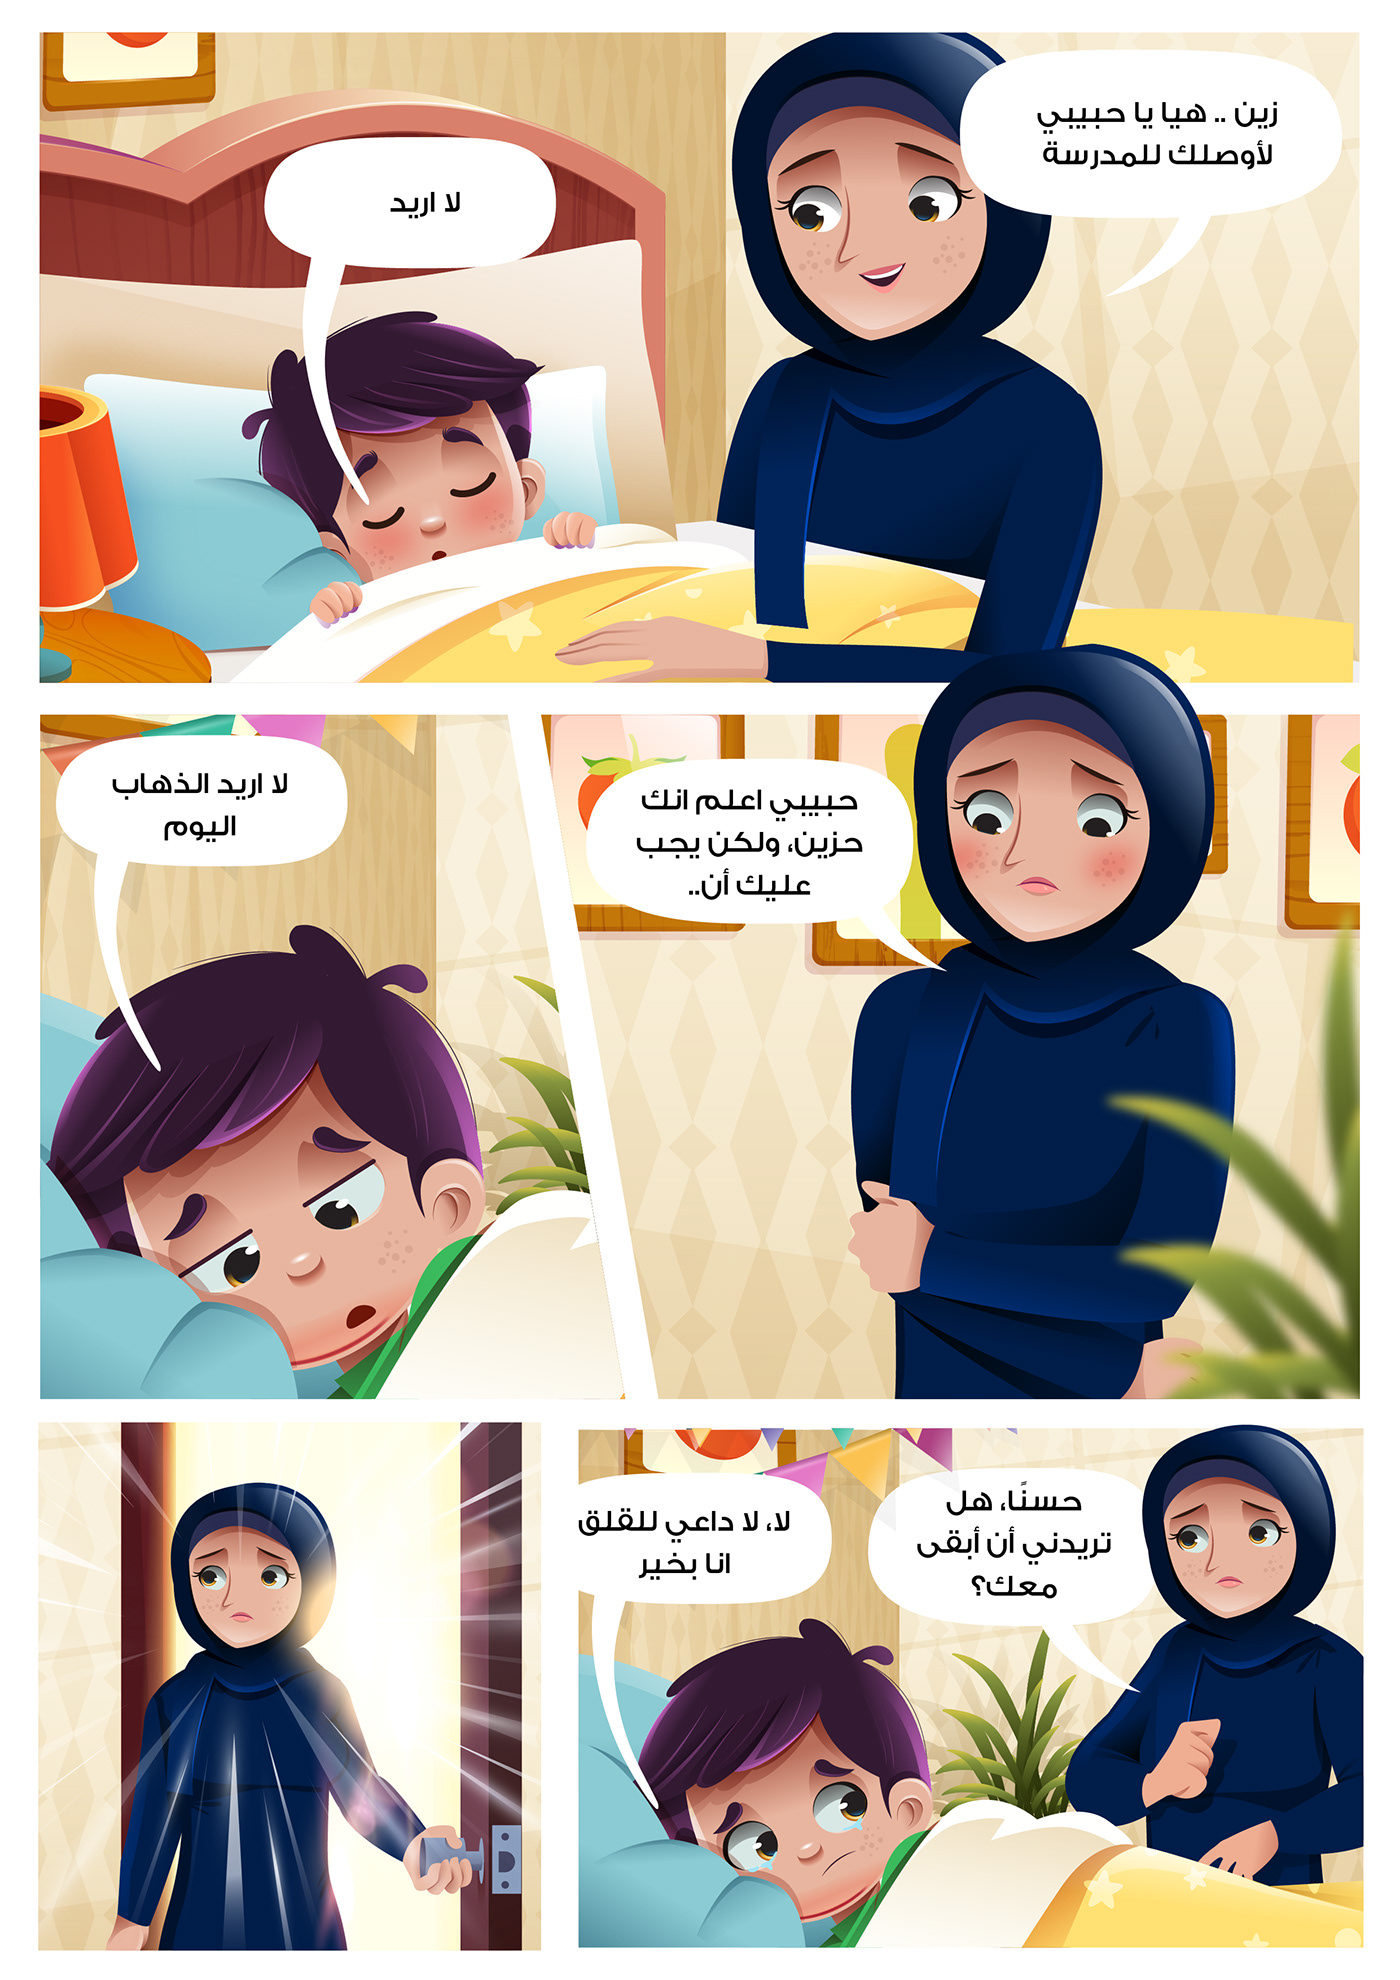 serag basel Arab kids Saudi character Character design  Digital Art  kids story children book kids illustration Drawing 